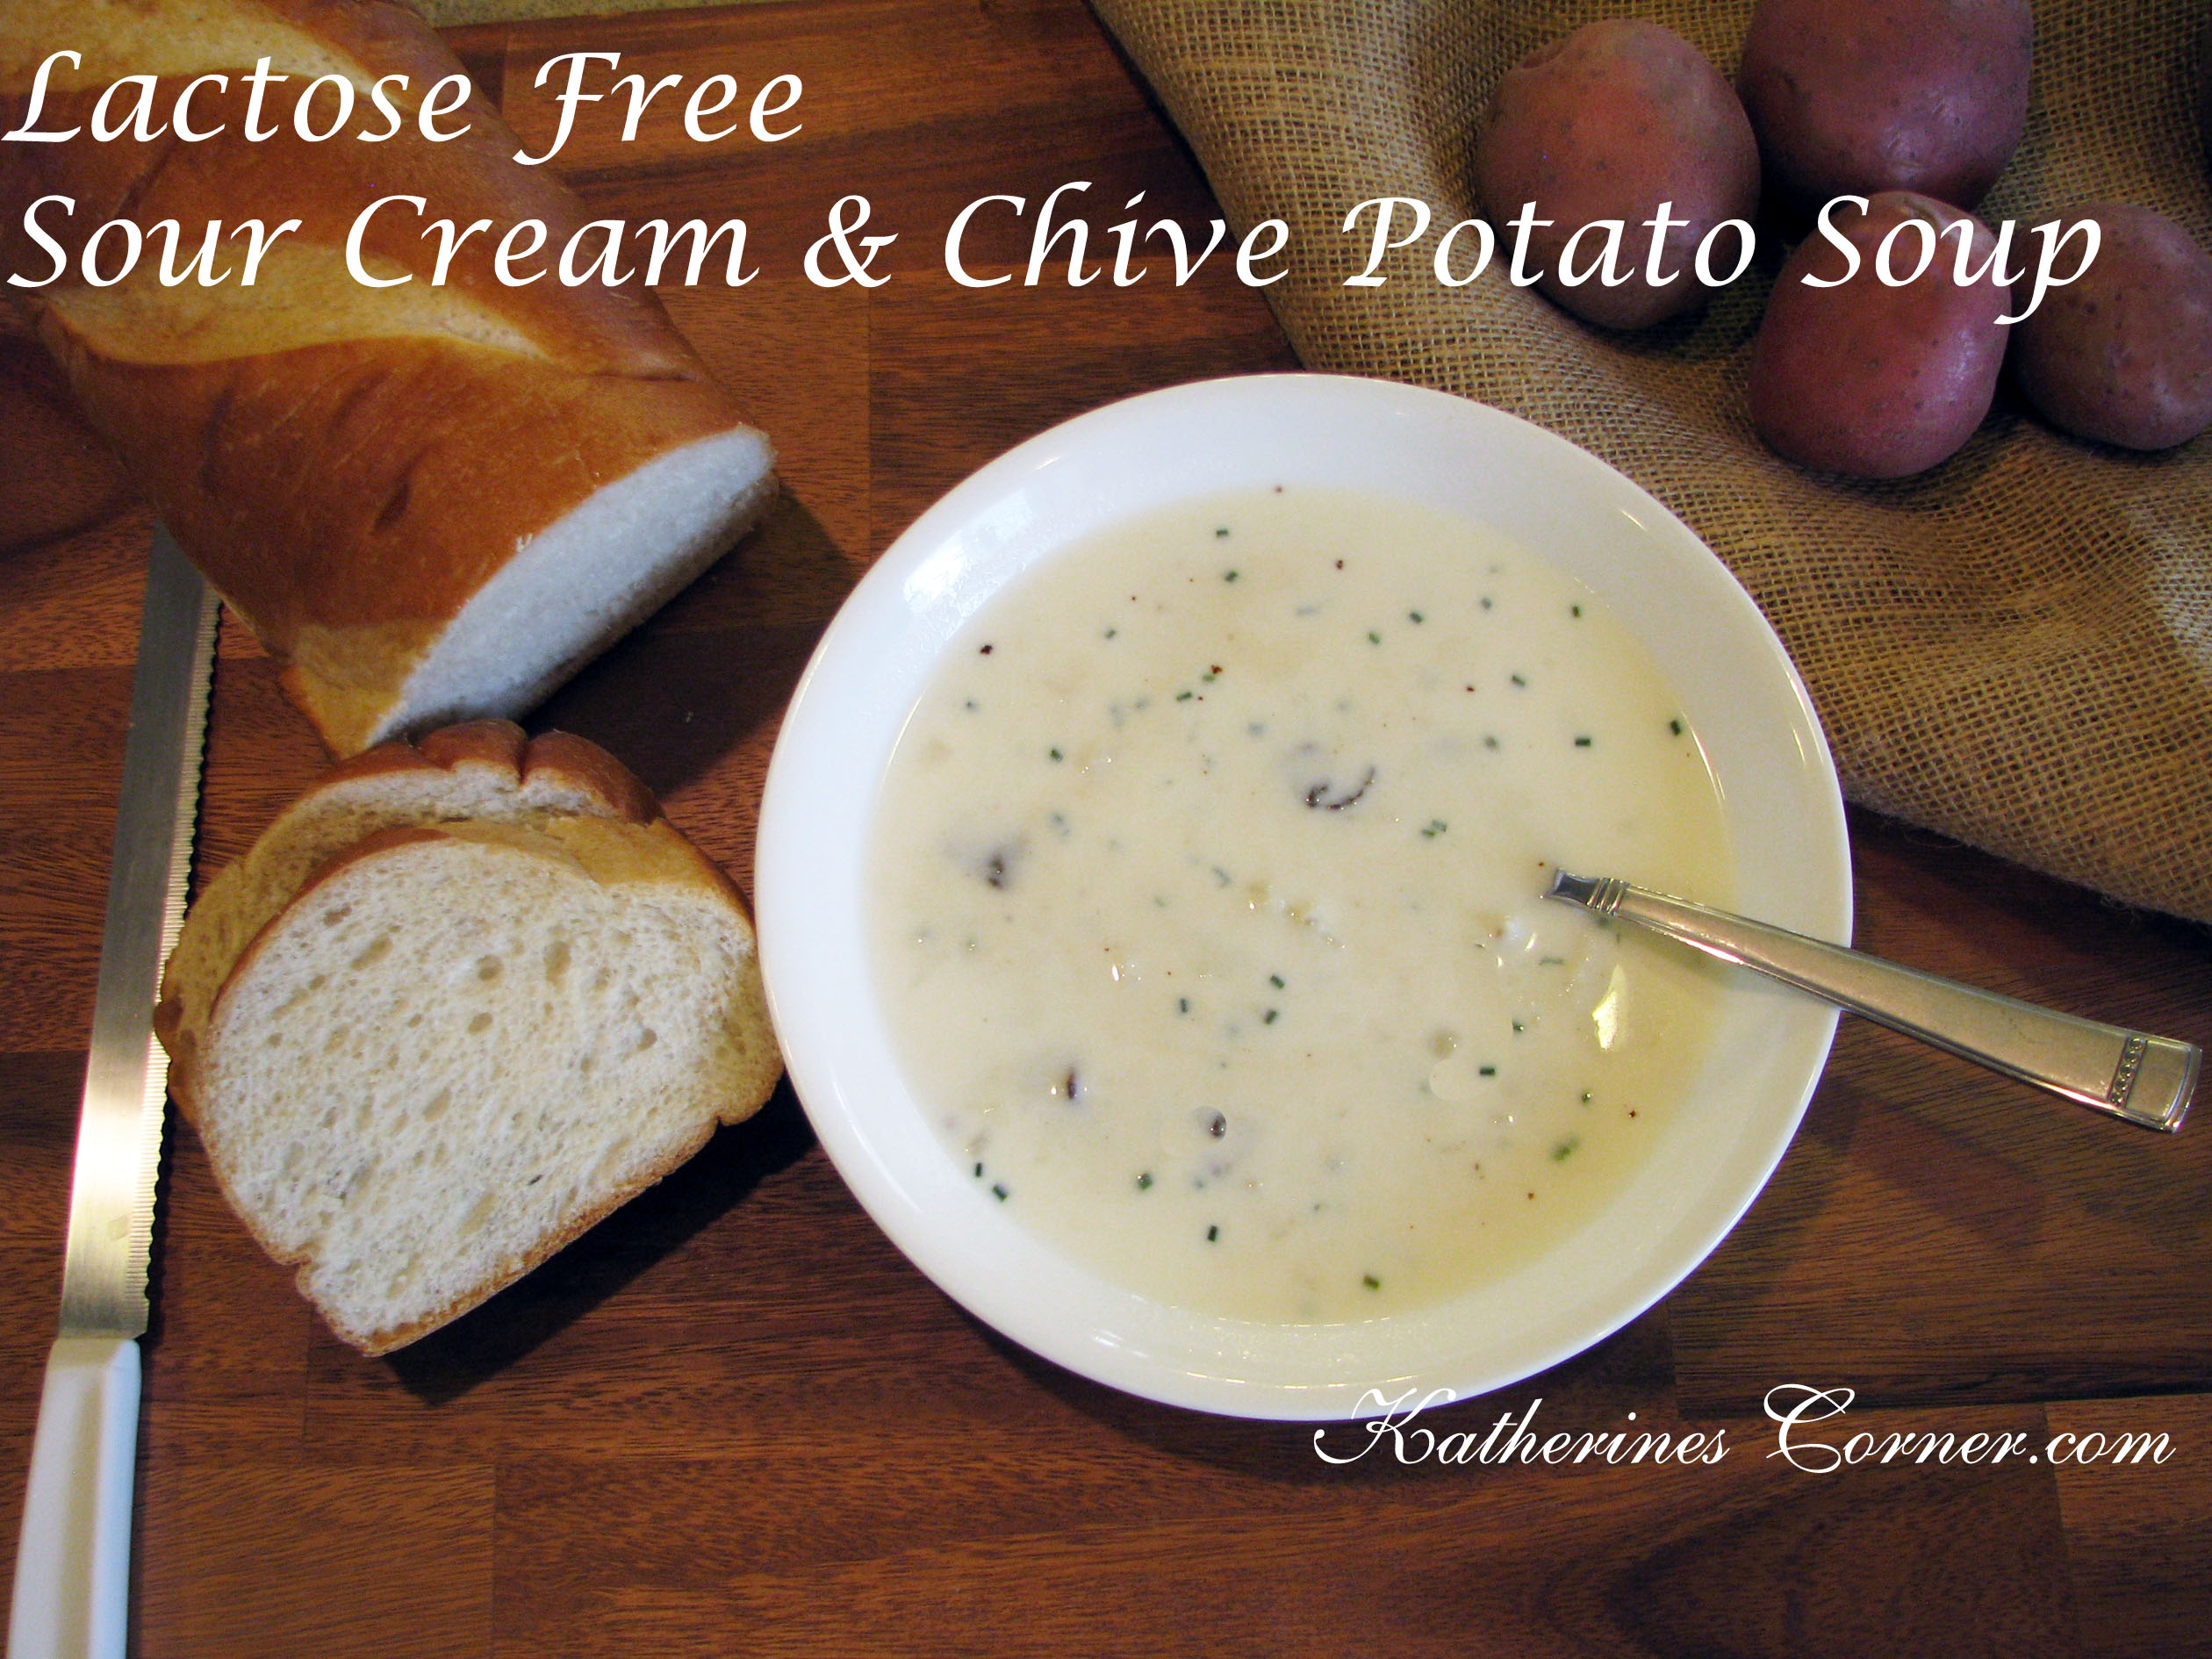 Lactose Free Sour Cream Chive Potato Soup